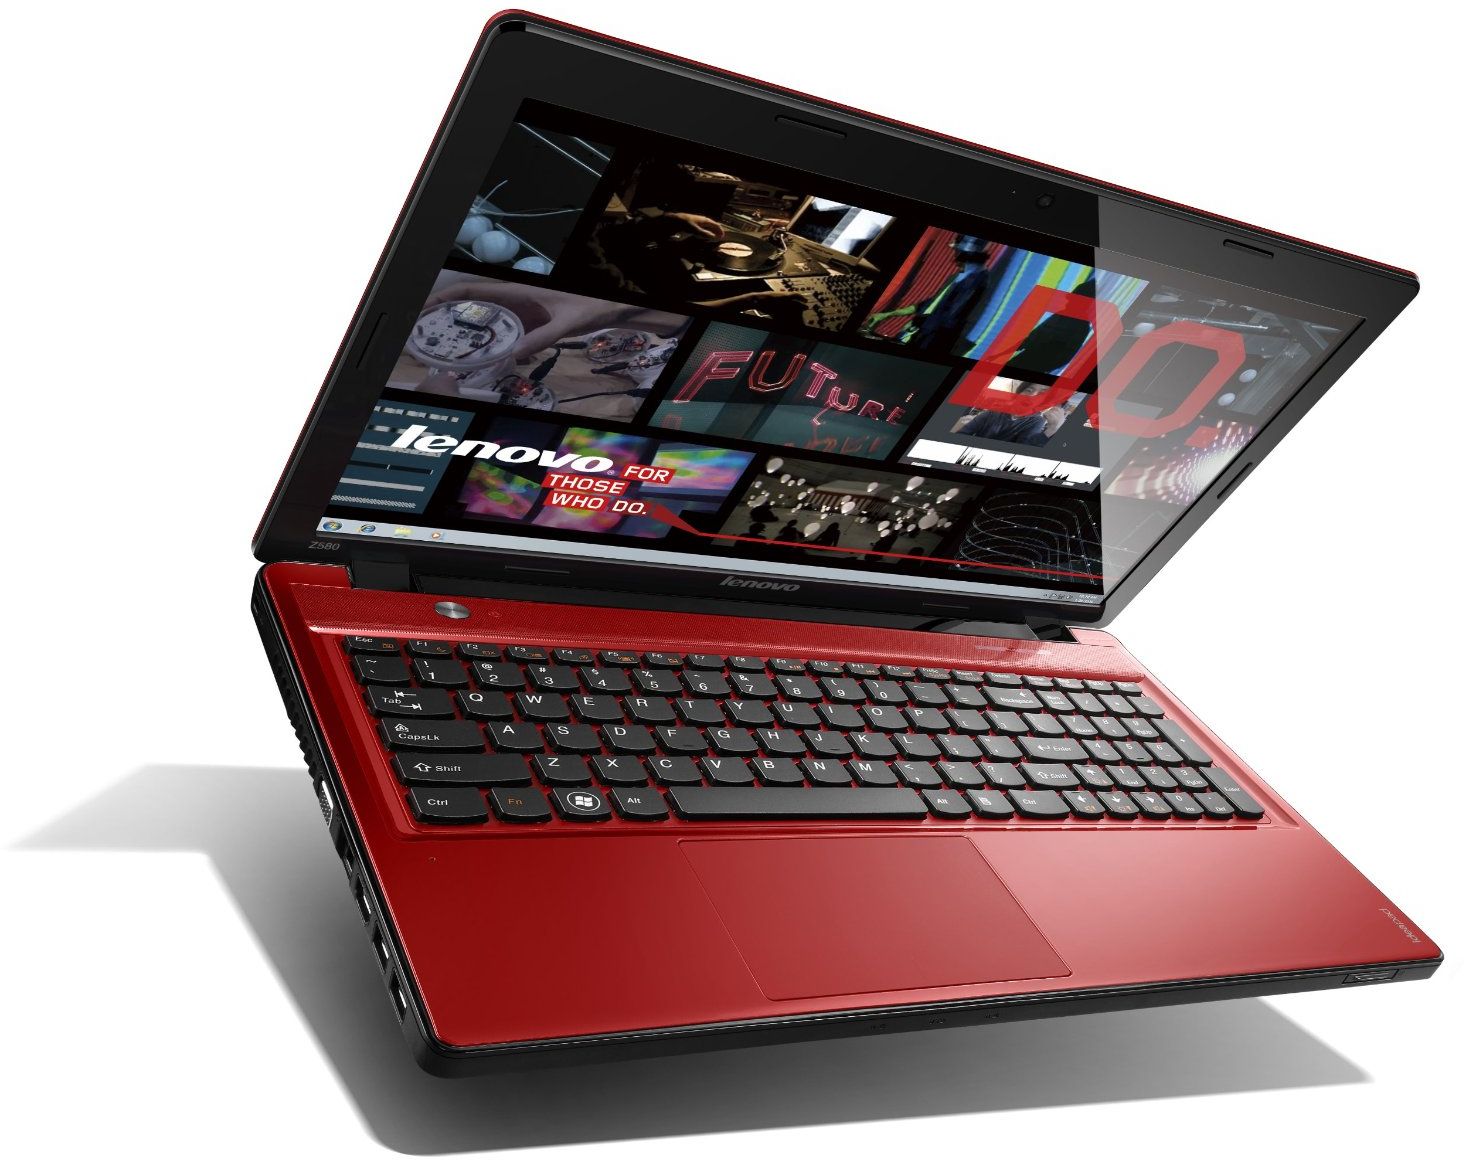 Купить ноутбук в области. Lenovo IDEAPAD z580. Z580 Lenovo красный. Z580 Laptop (IDEAPAD). Lenovo IDEAPAD z580 i5.